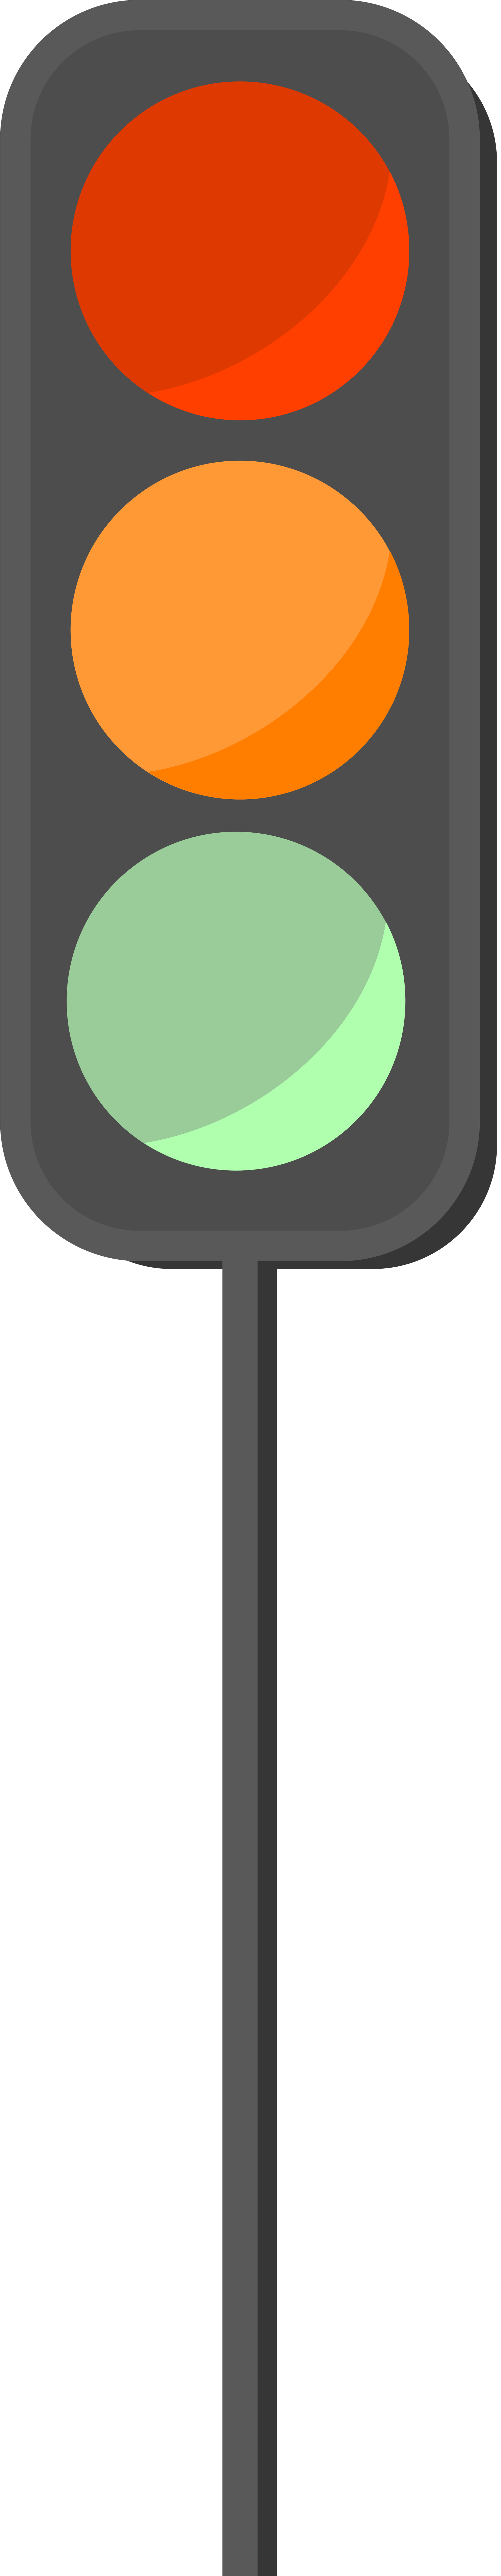 File:Traffic light icon svg.svg